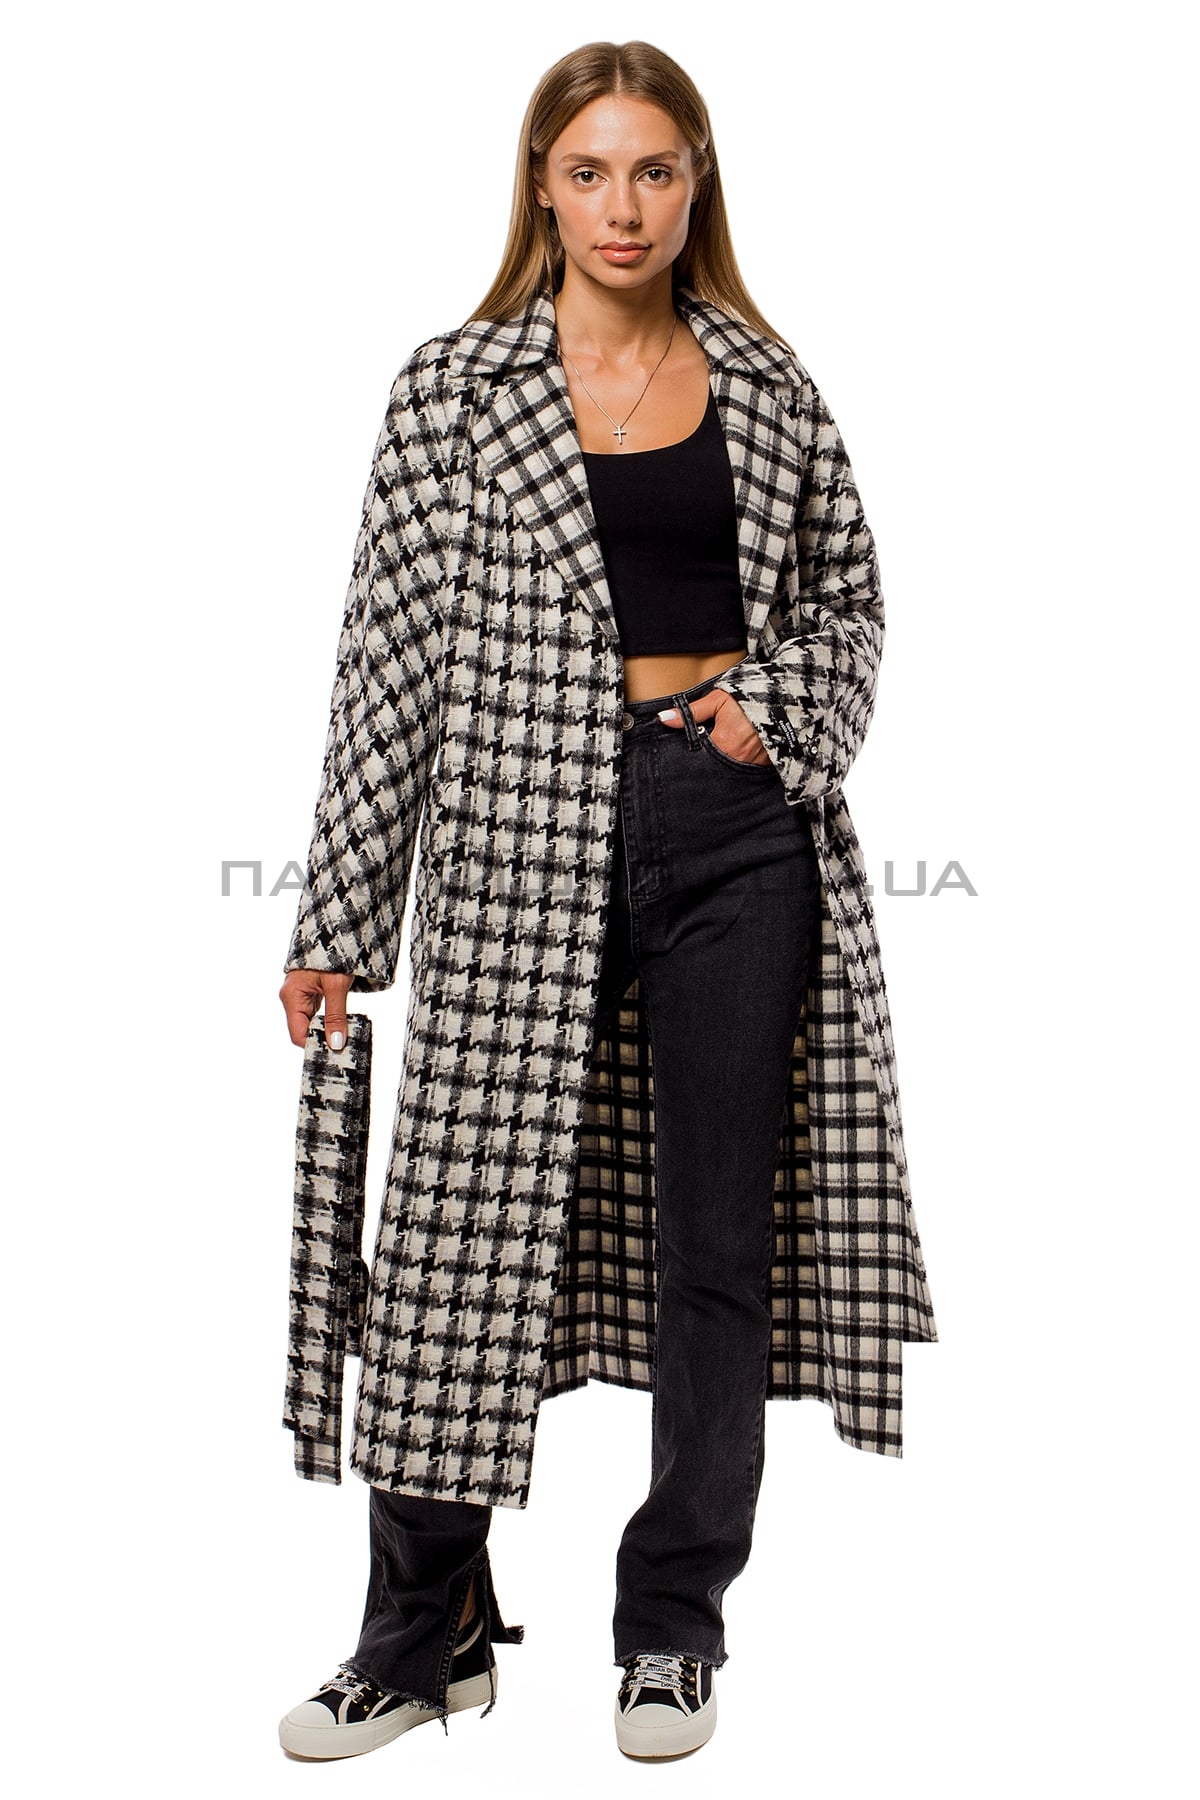  Стильне жіноче пальто гусяча лапка чорно-біле